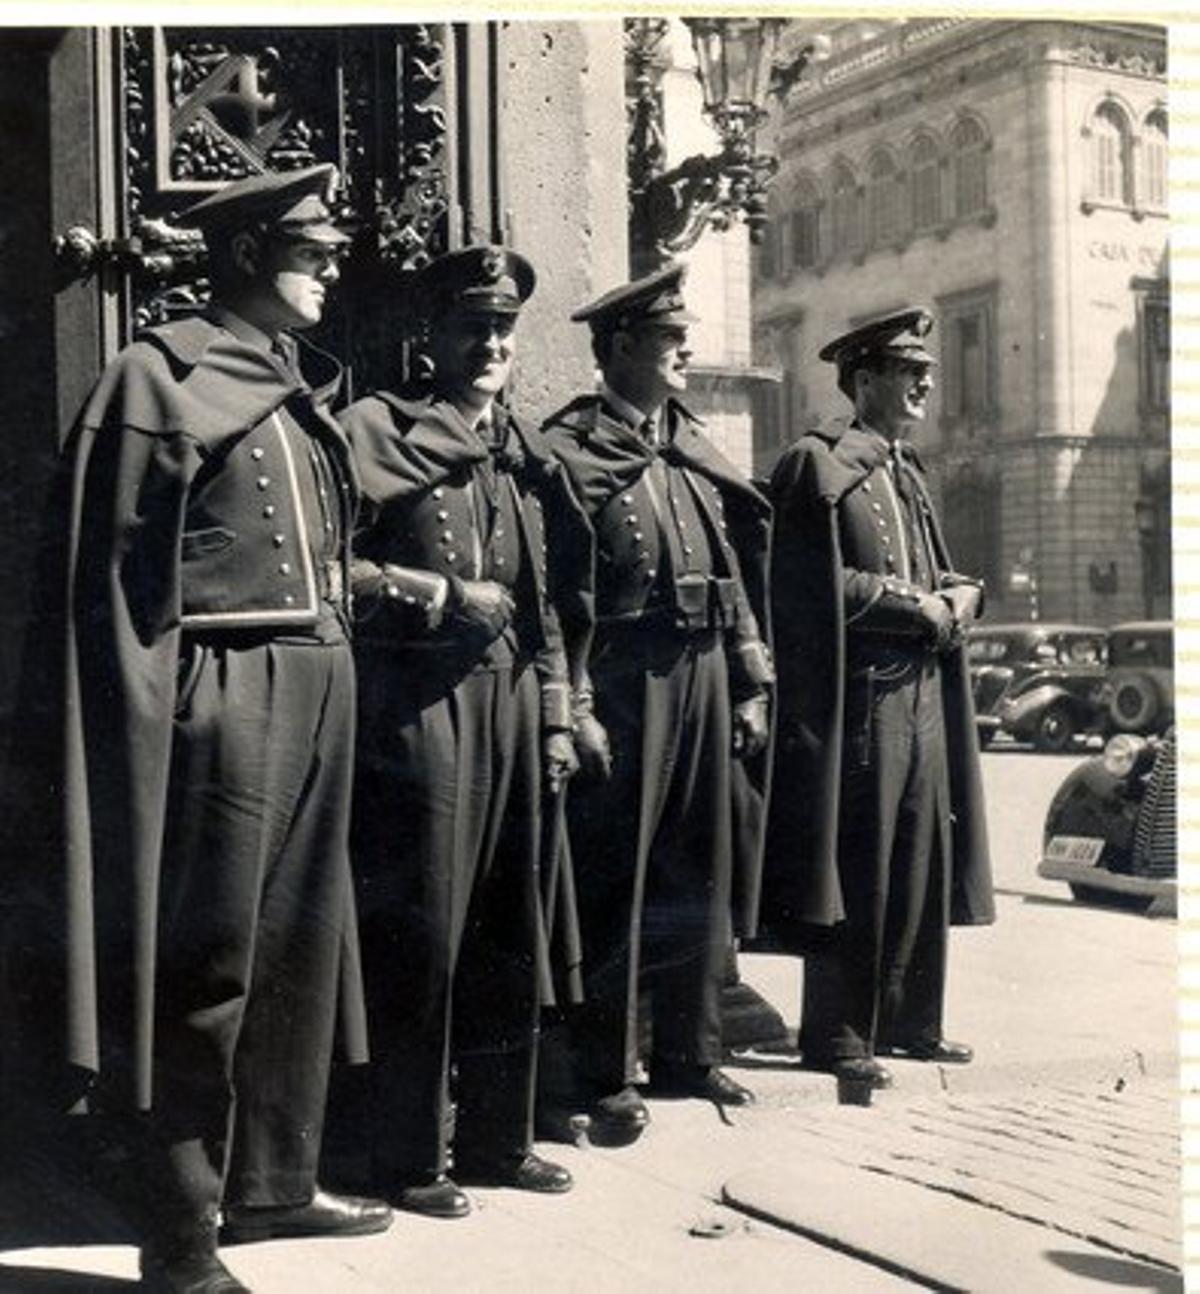 Un grup de mossos durant l’època franquista.